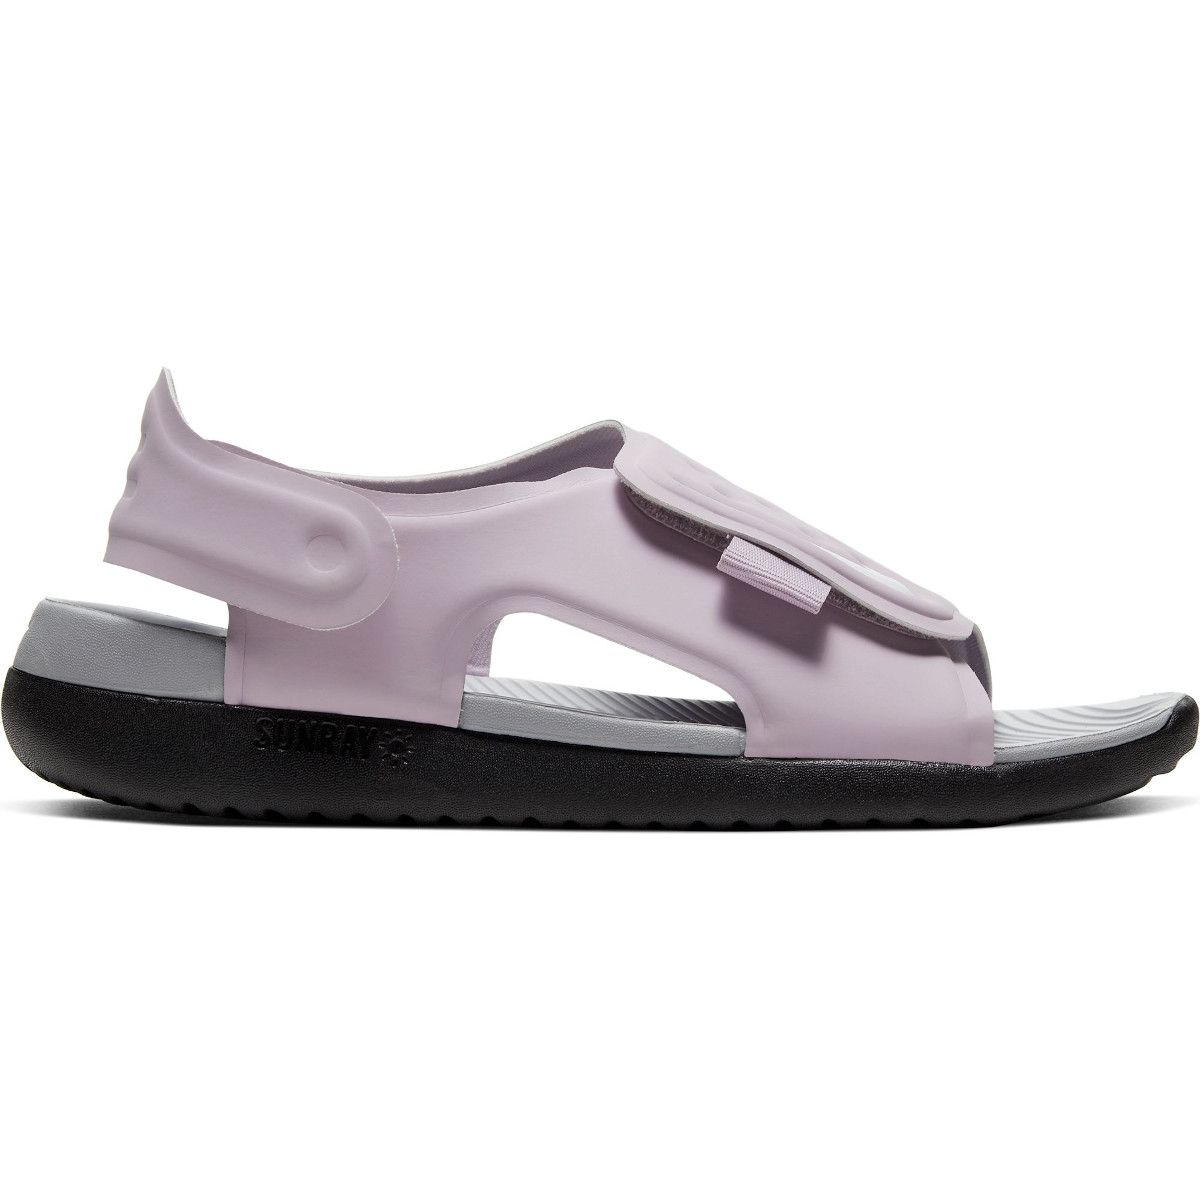 tenga en cuenta quiero Inútil Nike Sunray Adjust 5 Girl's Sandals (GS) AJ9076-501